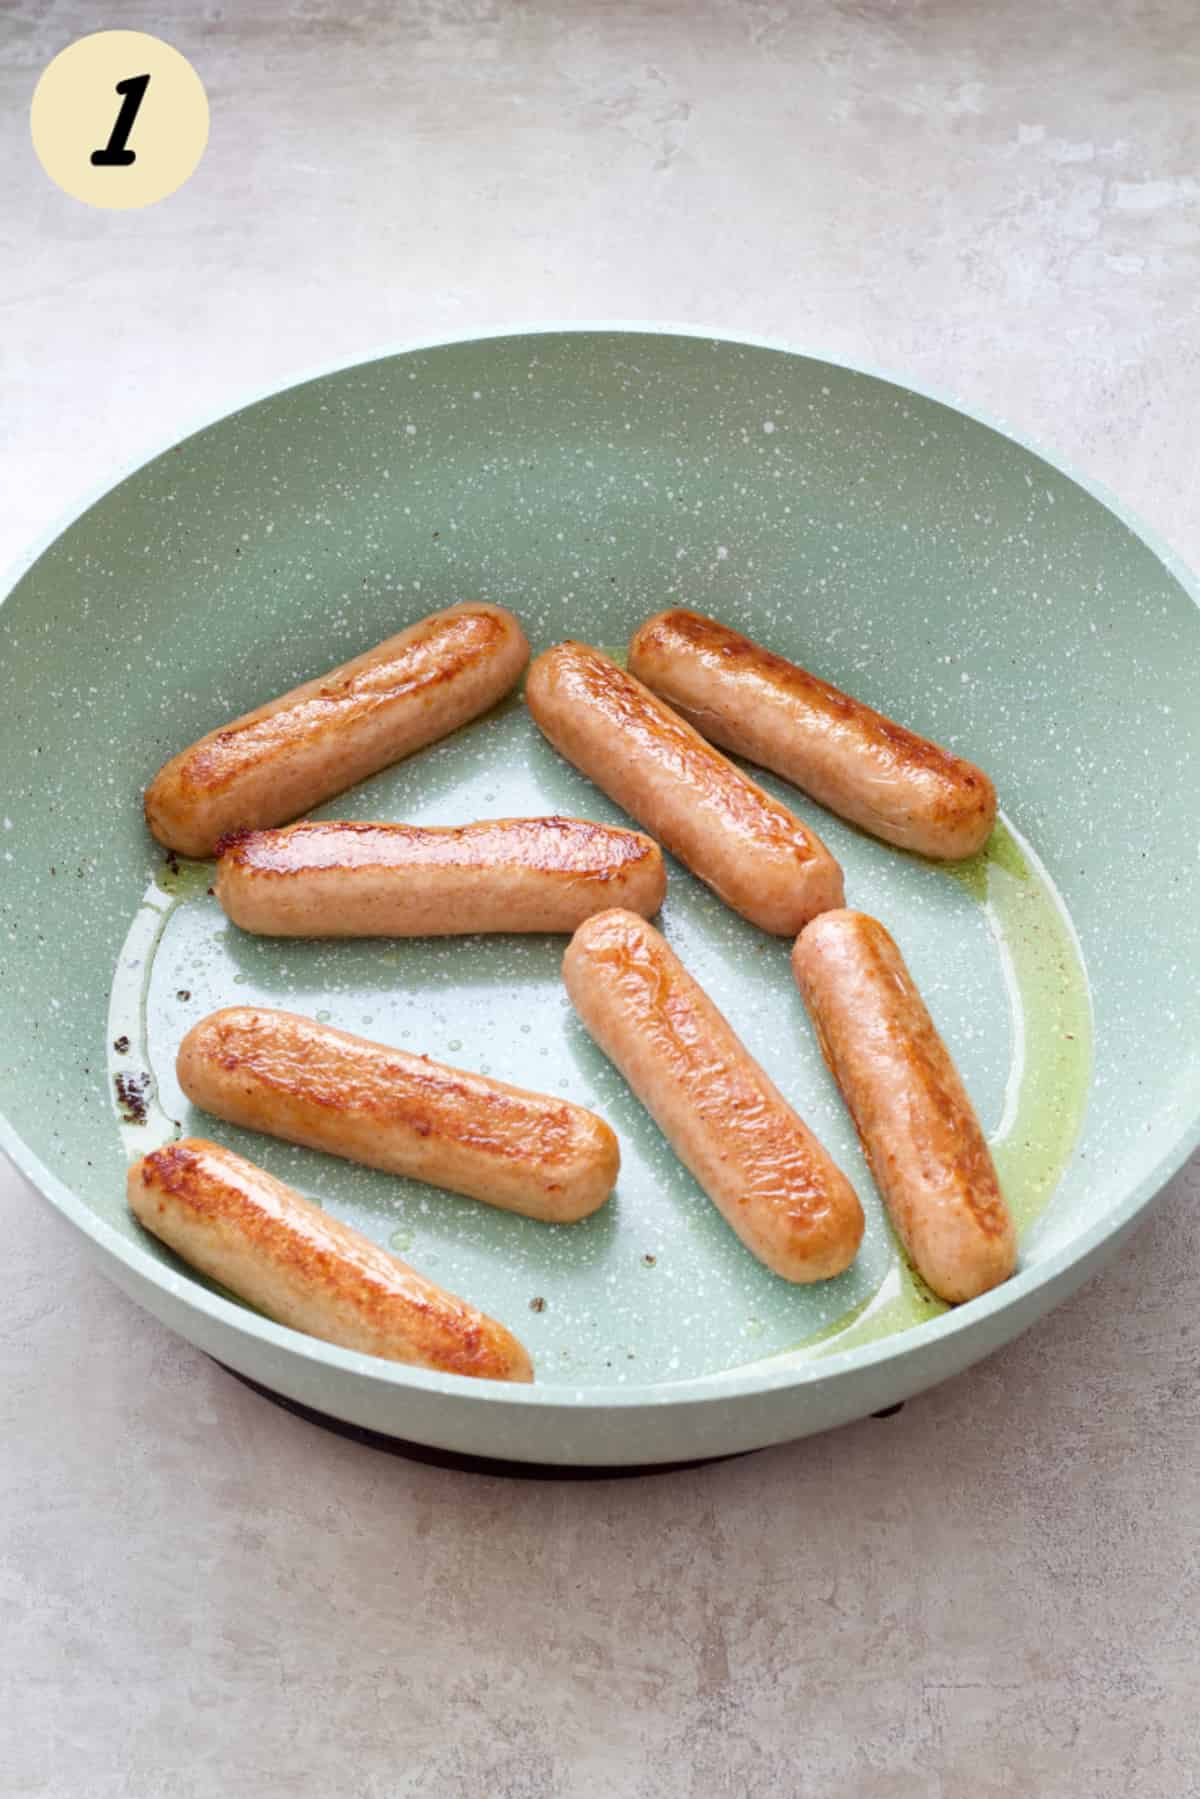 Vegan sausages in a frying pan.